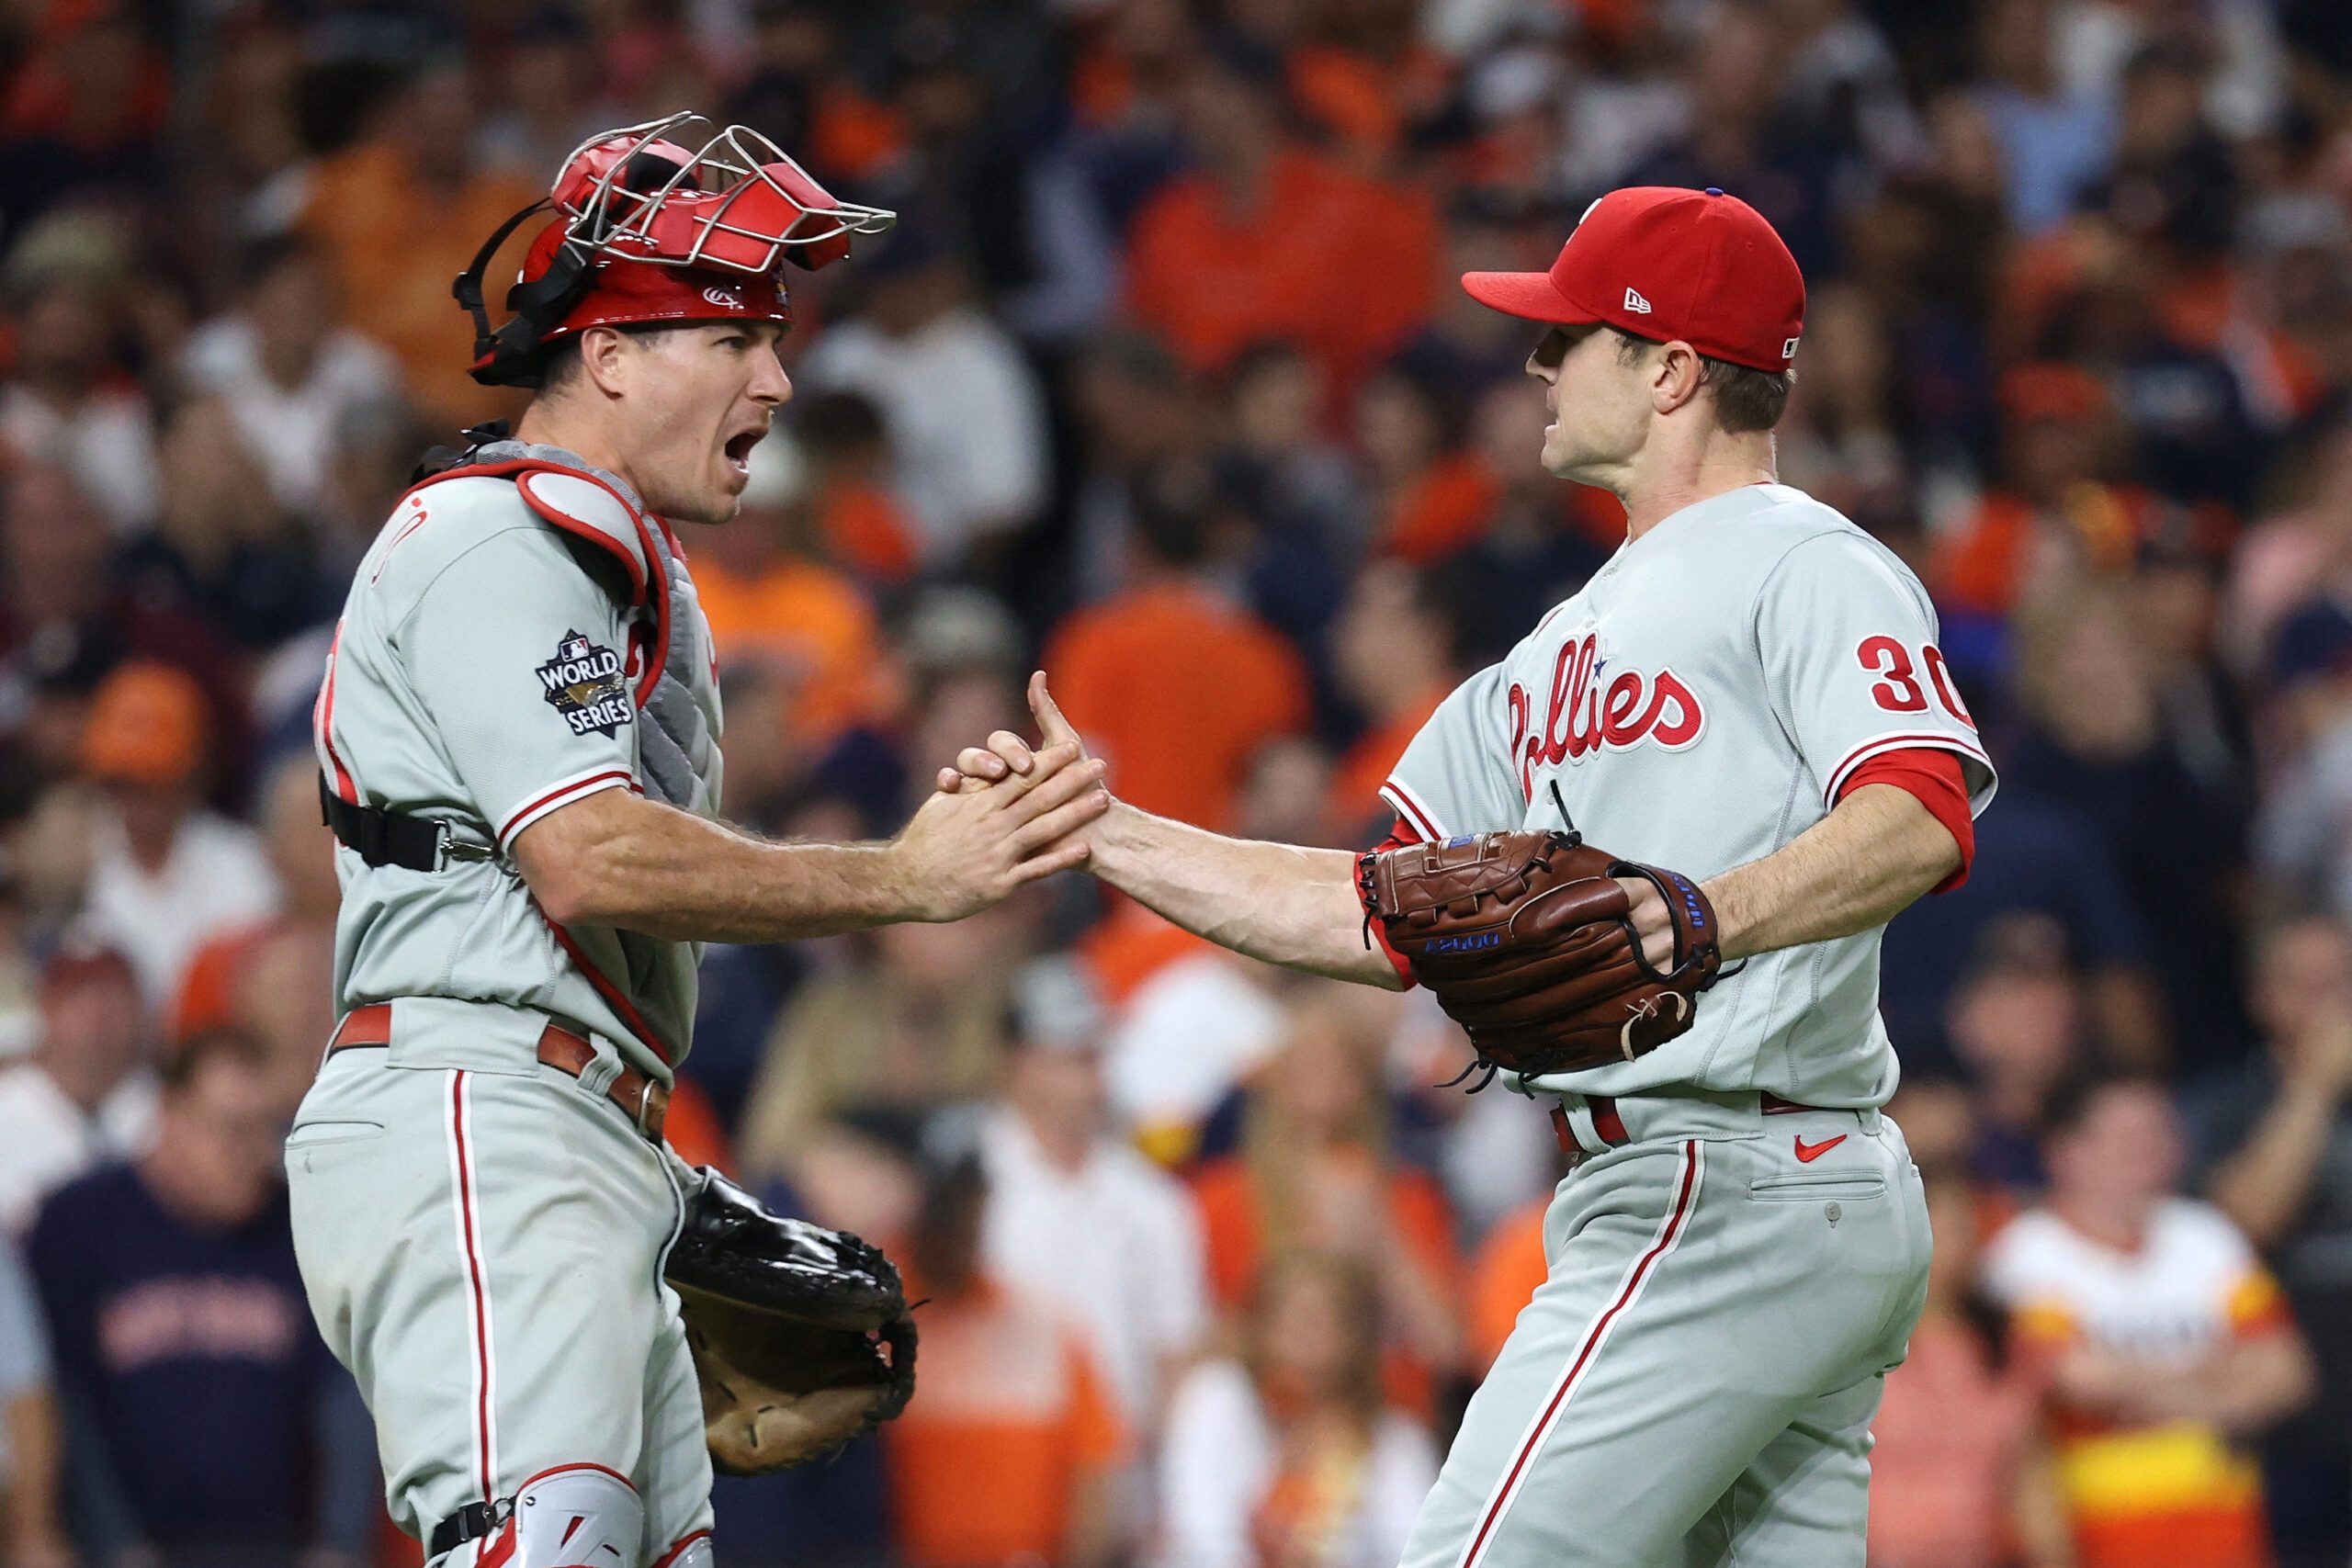 Phillies overturn 5-run deficit, stun Astros in World Series opener